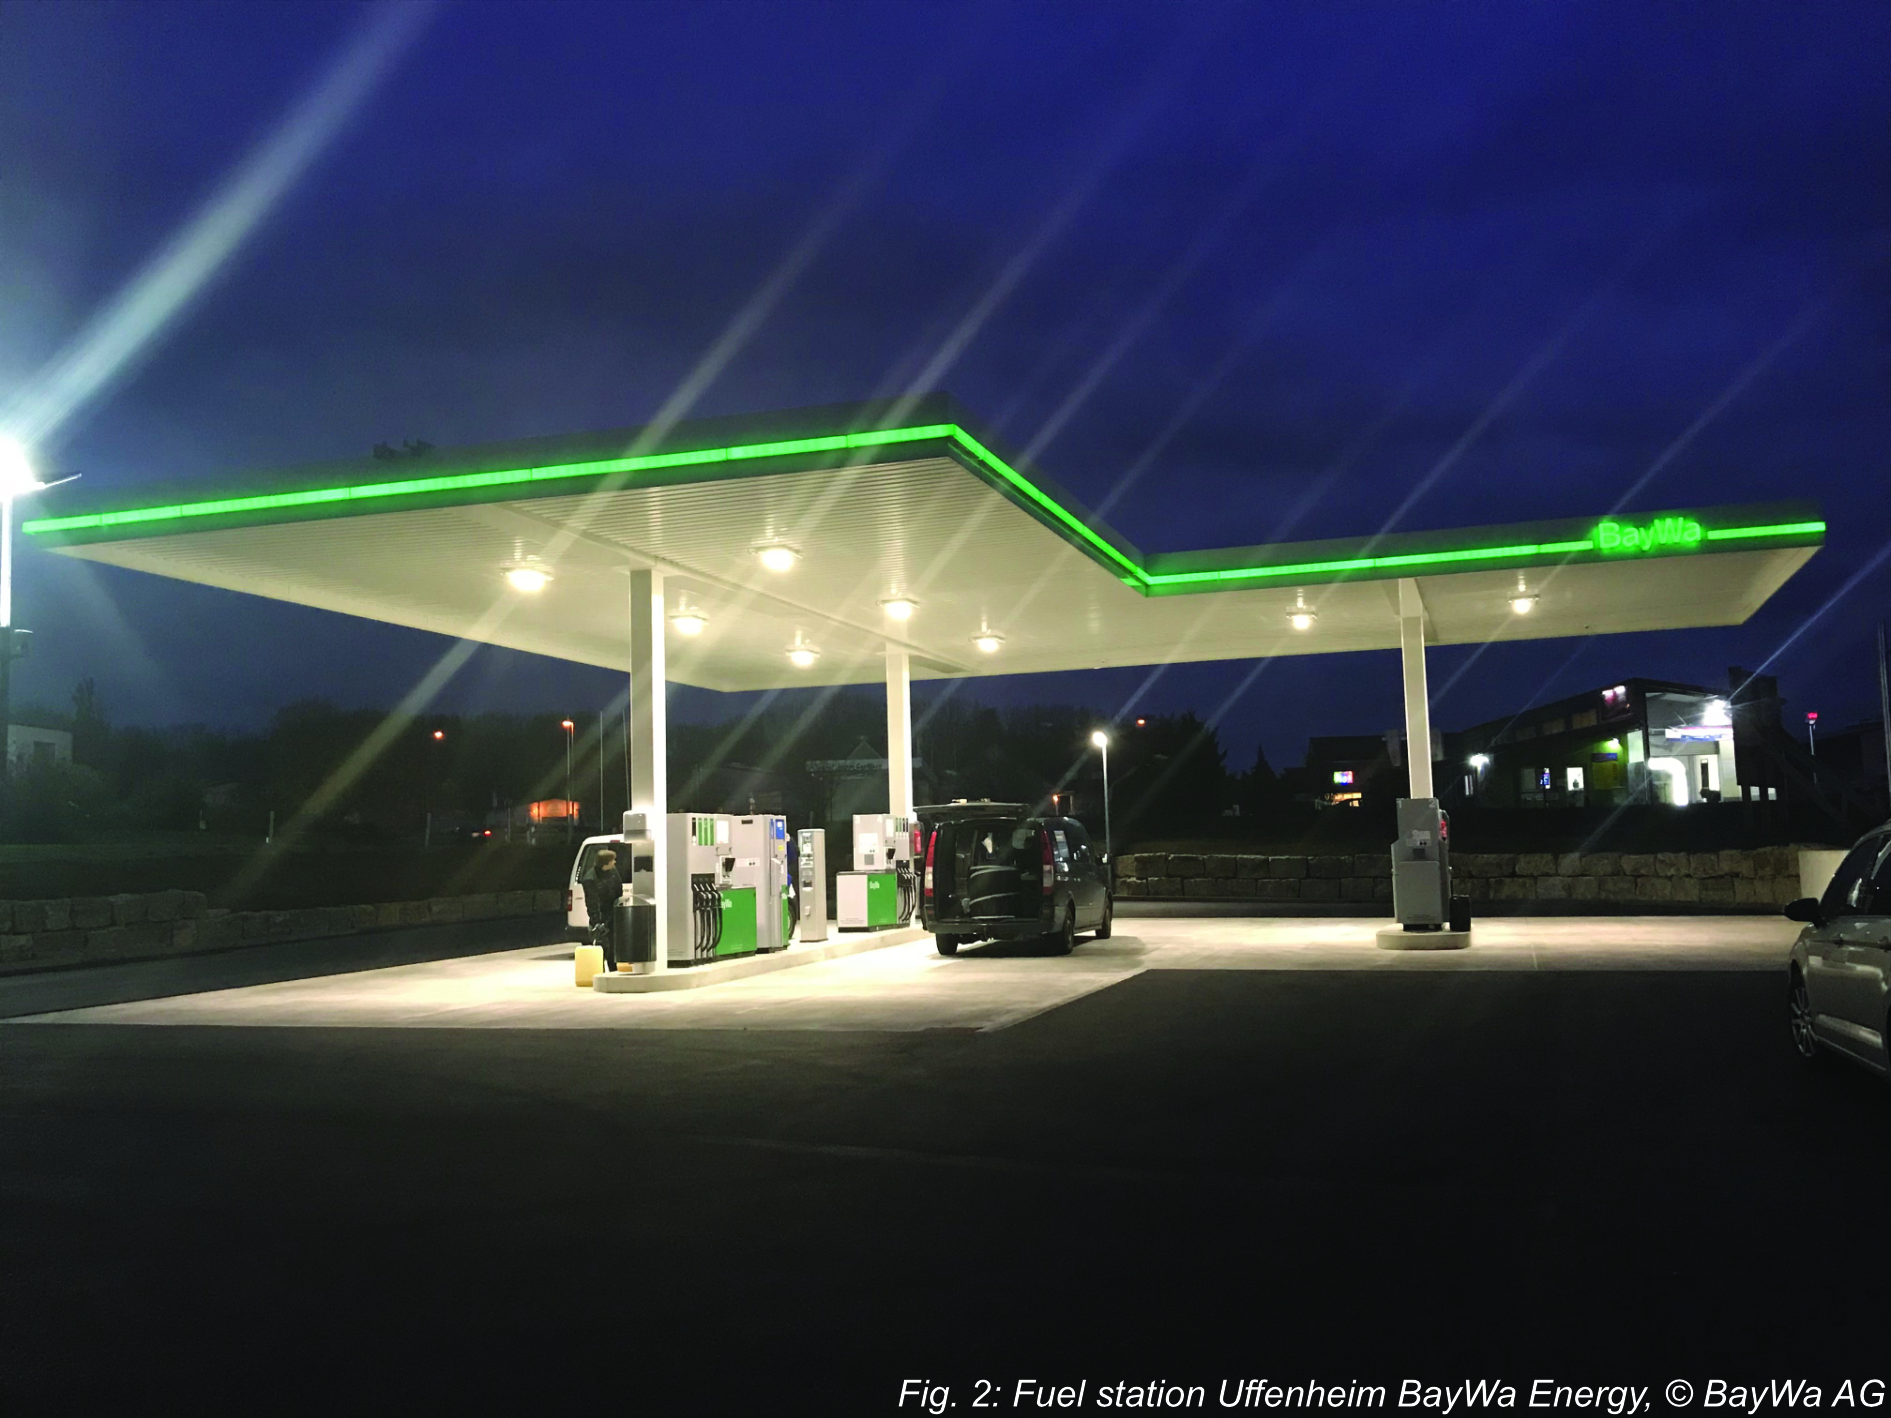 Fuel station Uffenheim BayWa Energy, © BayWa AG